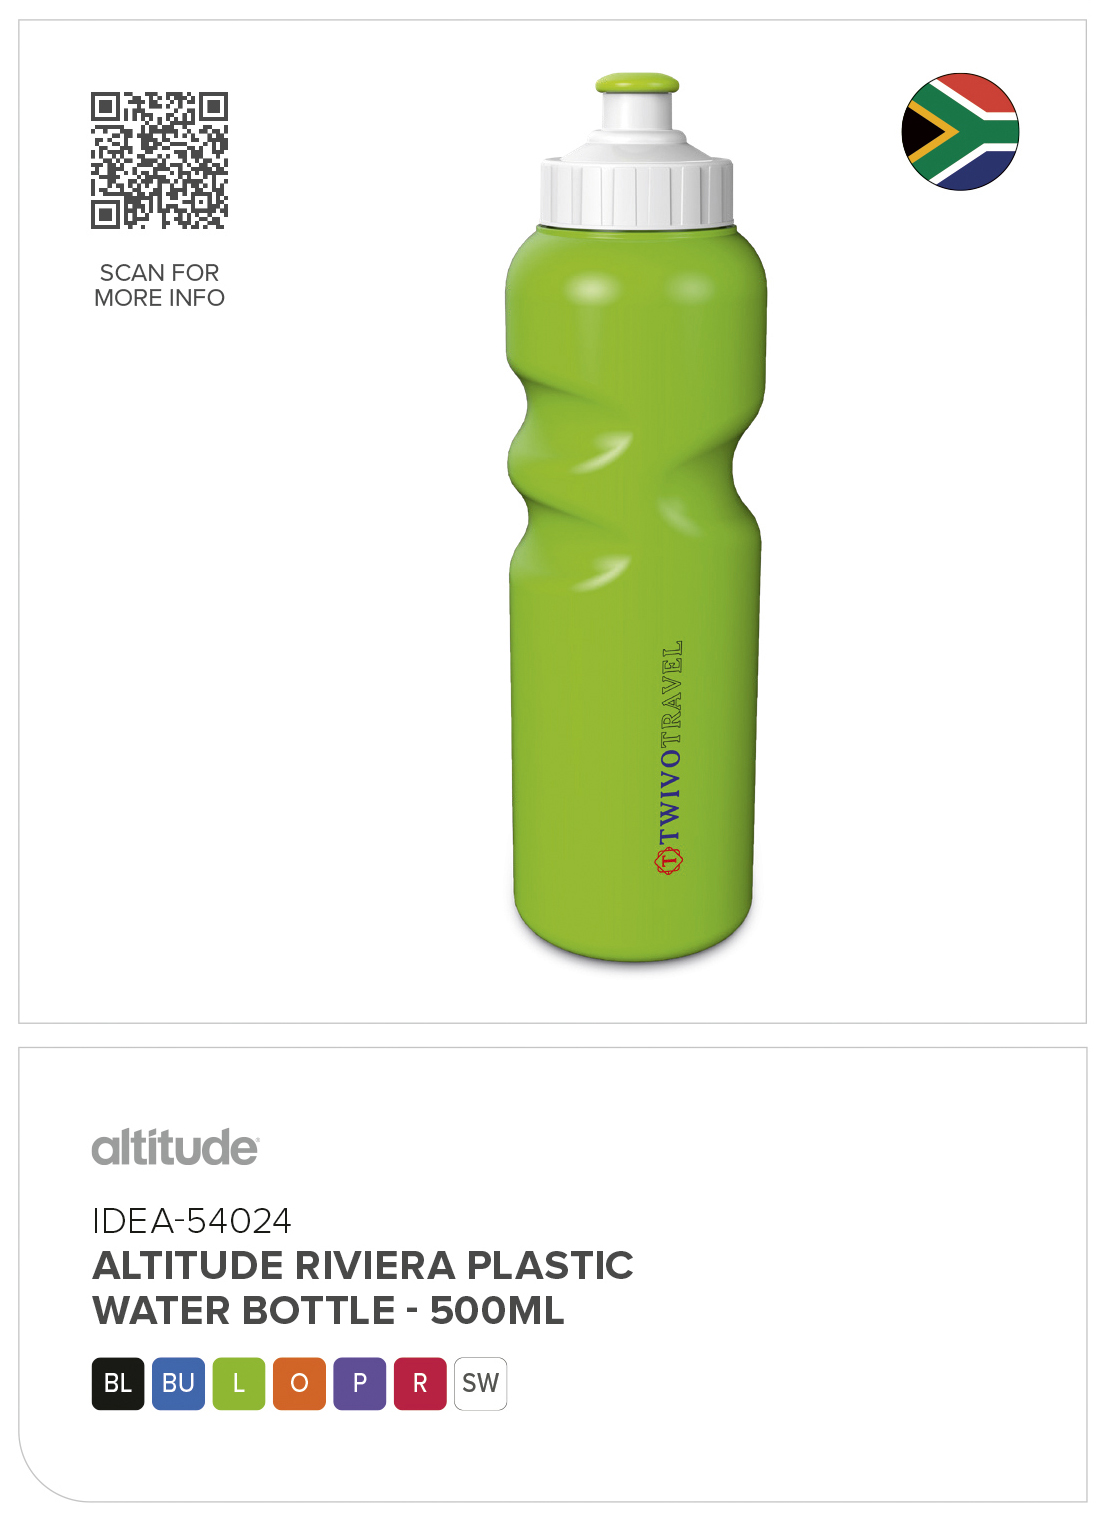 IDEA-54024 - Altitude Riviera Plastic Water Bottle - 500ml - Catalogue Image